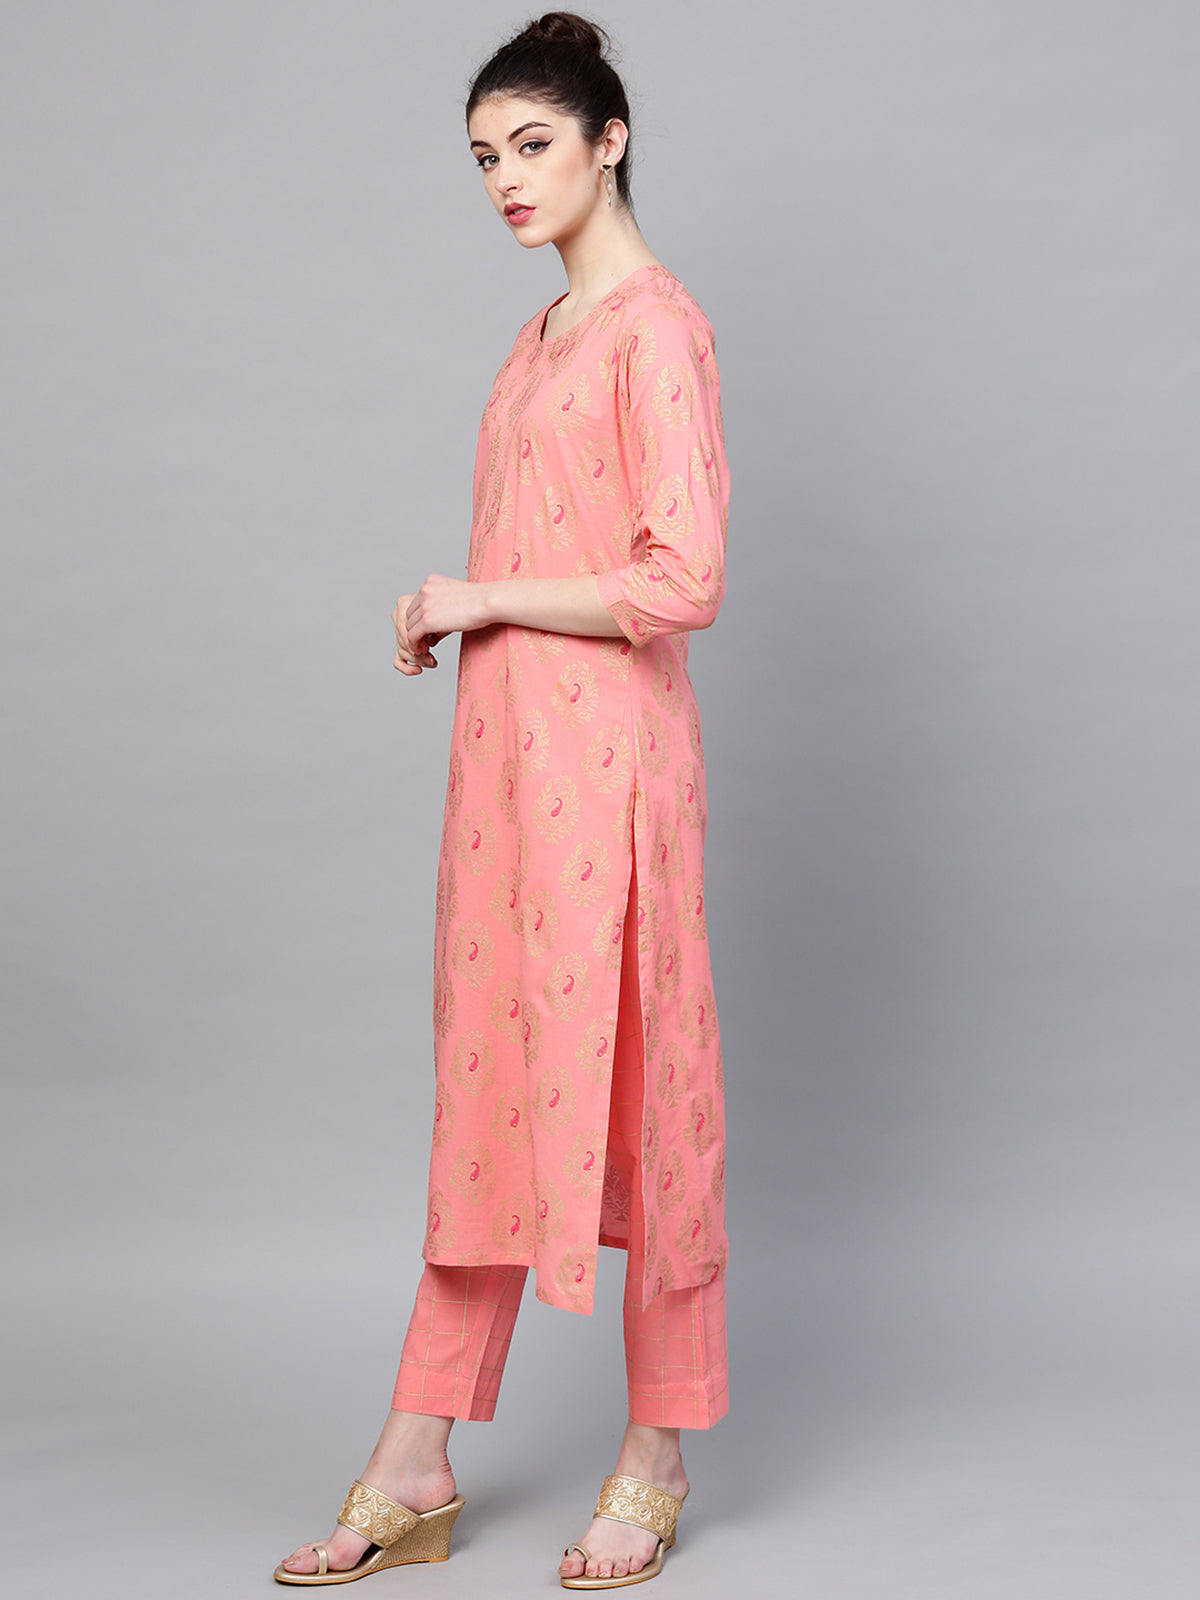 Ishin Women's Cotton Pink Foil Printed A-Line Kurta Palazzo Set